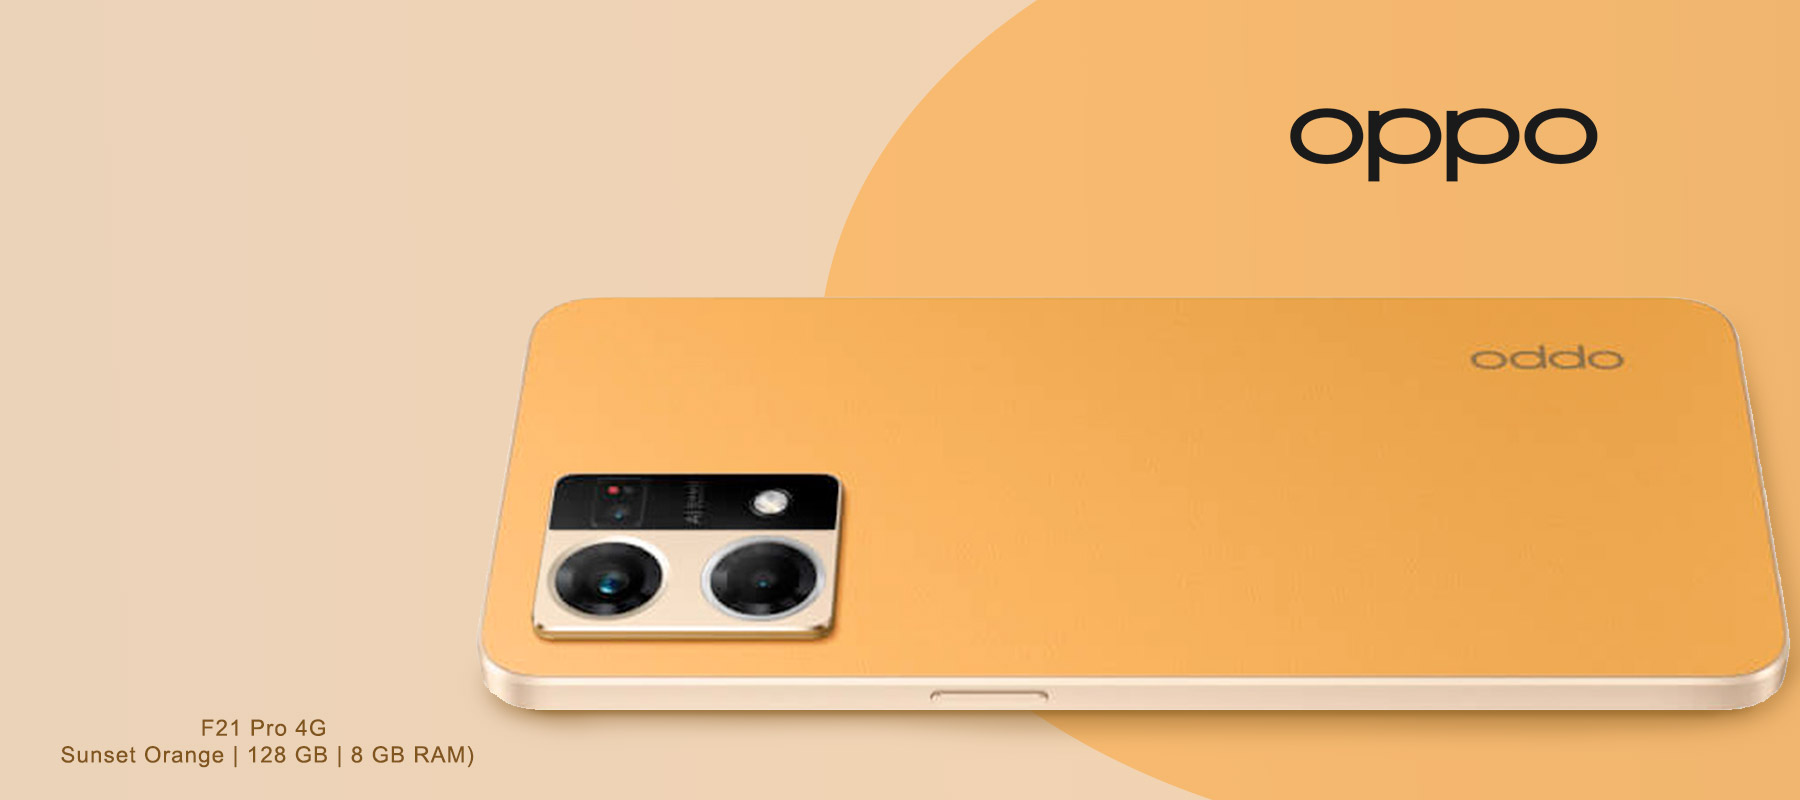 Oppo F21 Pro 4G (Sunset Orange, 128 GB) (8 GB RAM)